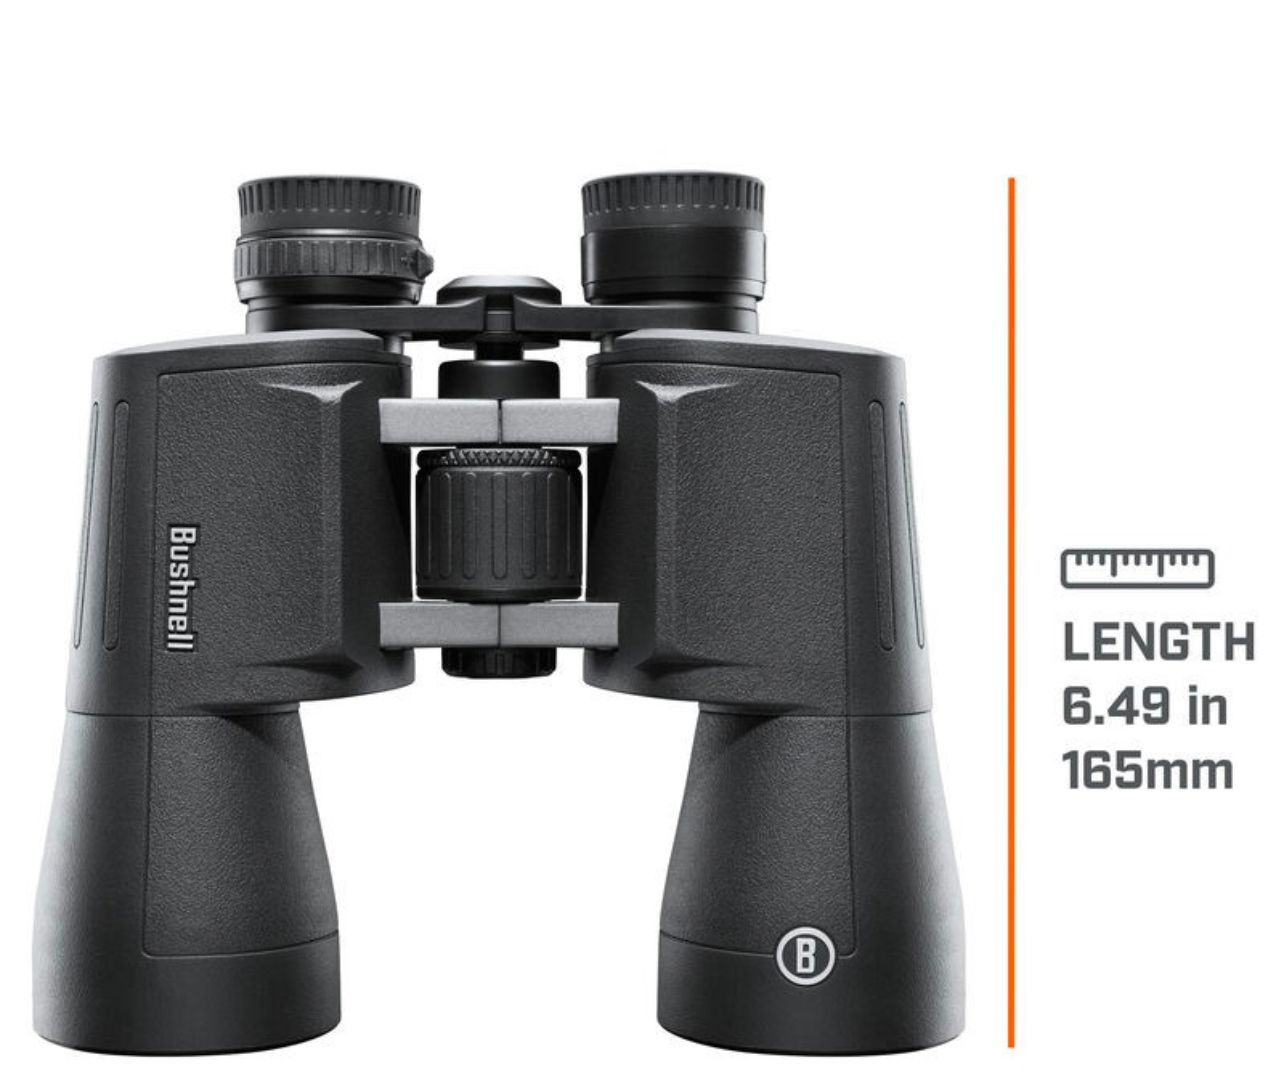 Bushnell Binoculars Powerview2 12x50 (PWV1250) - Limited Lifetime Warranty